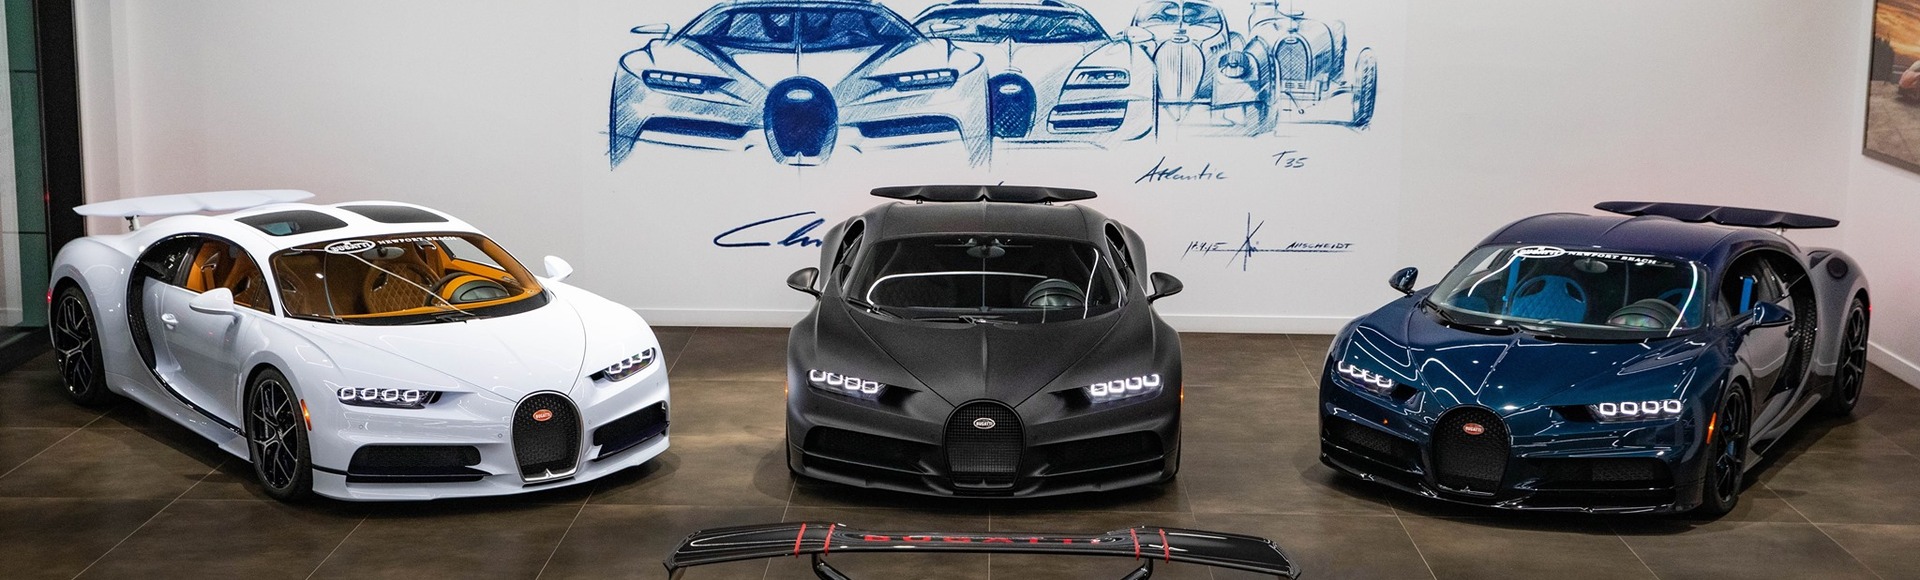 Bugatti Newport Beach